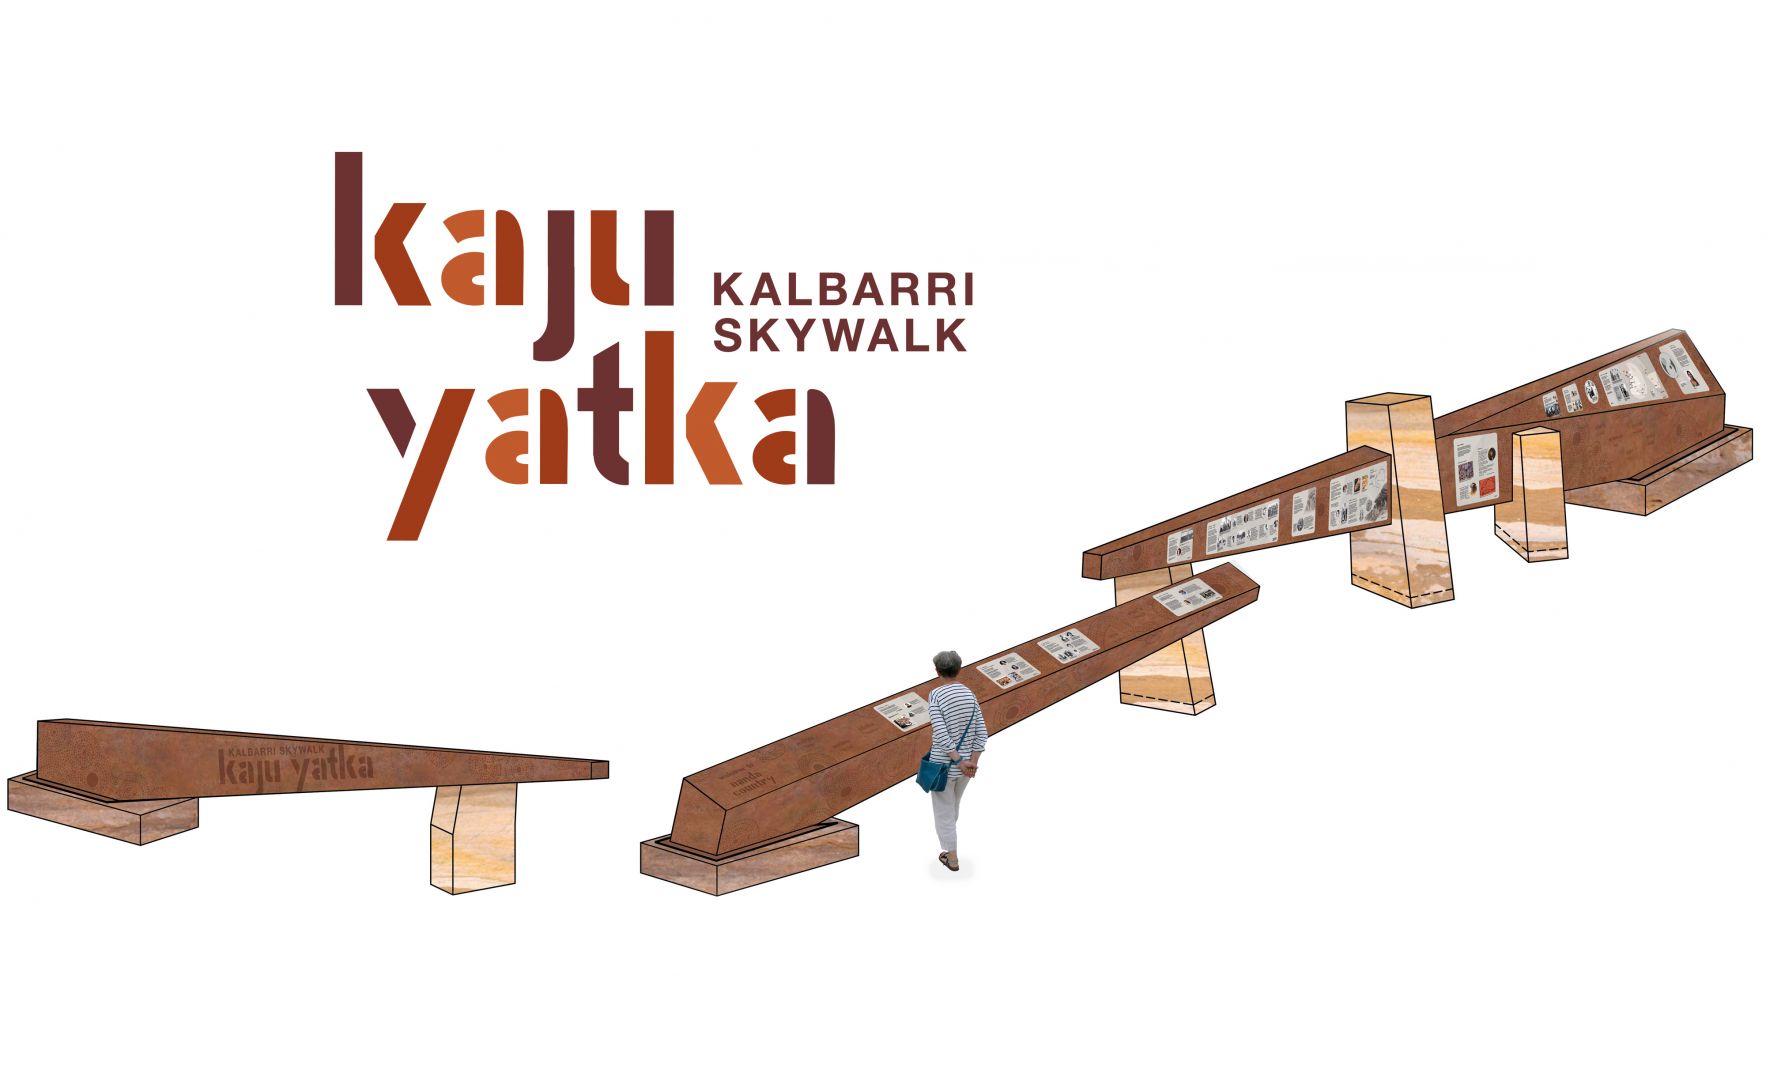 Creative Spaces - Projects - Kalbarri Skywalk - Interpretation Design